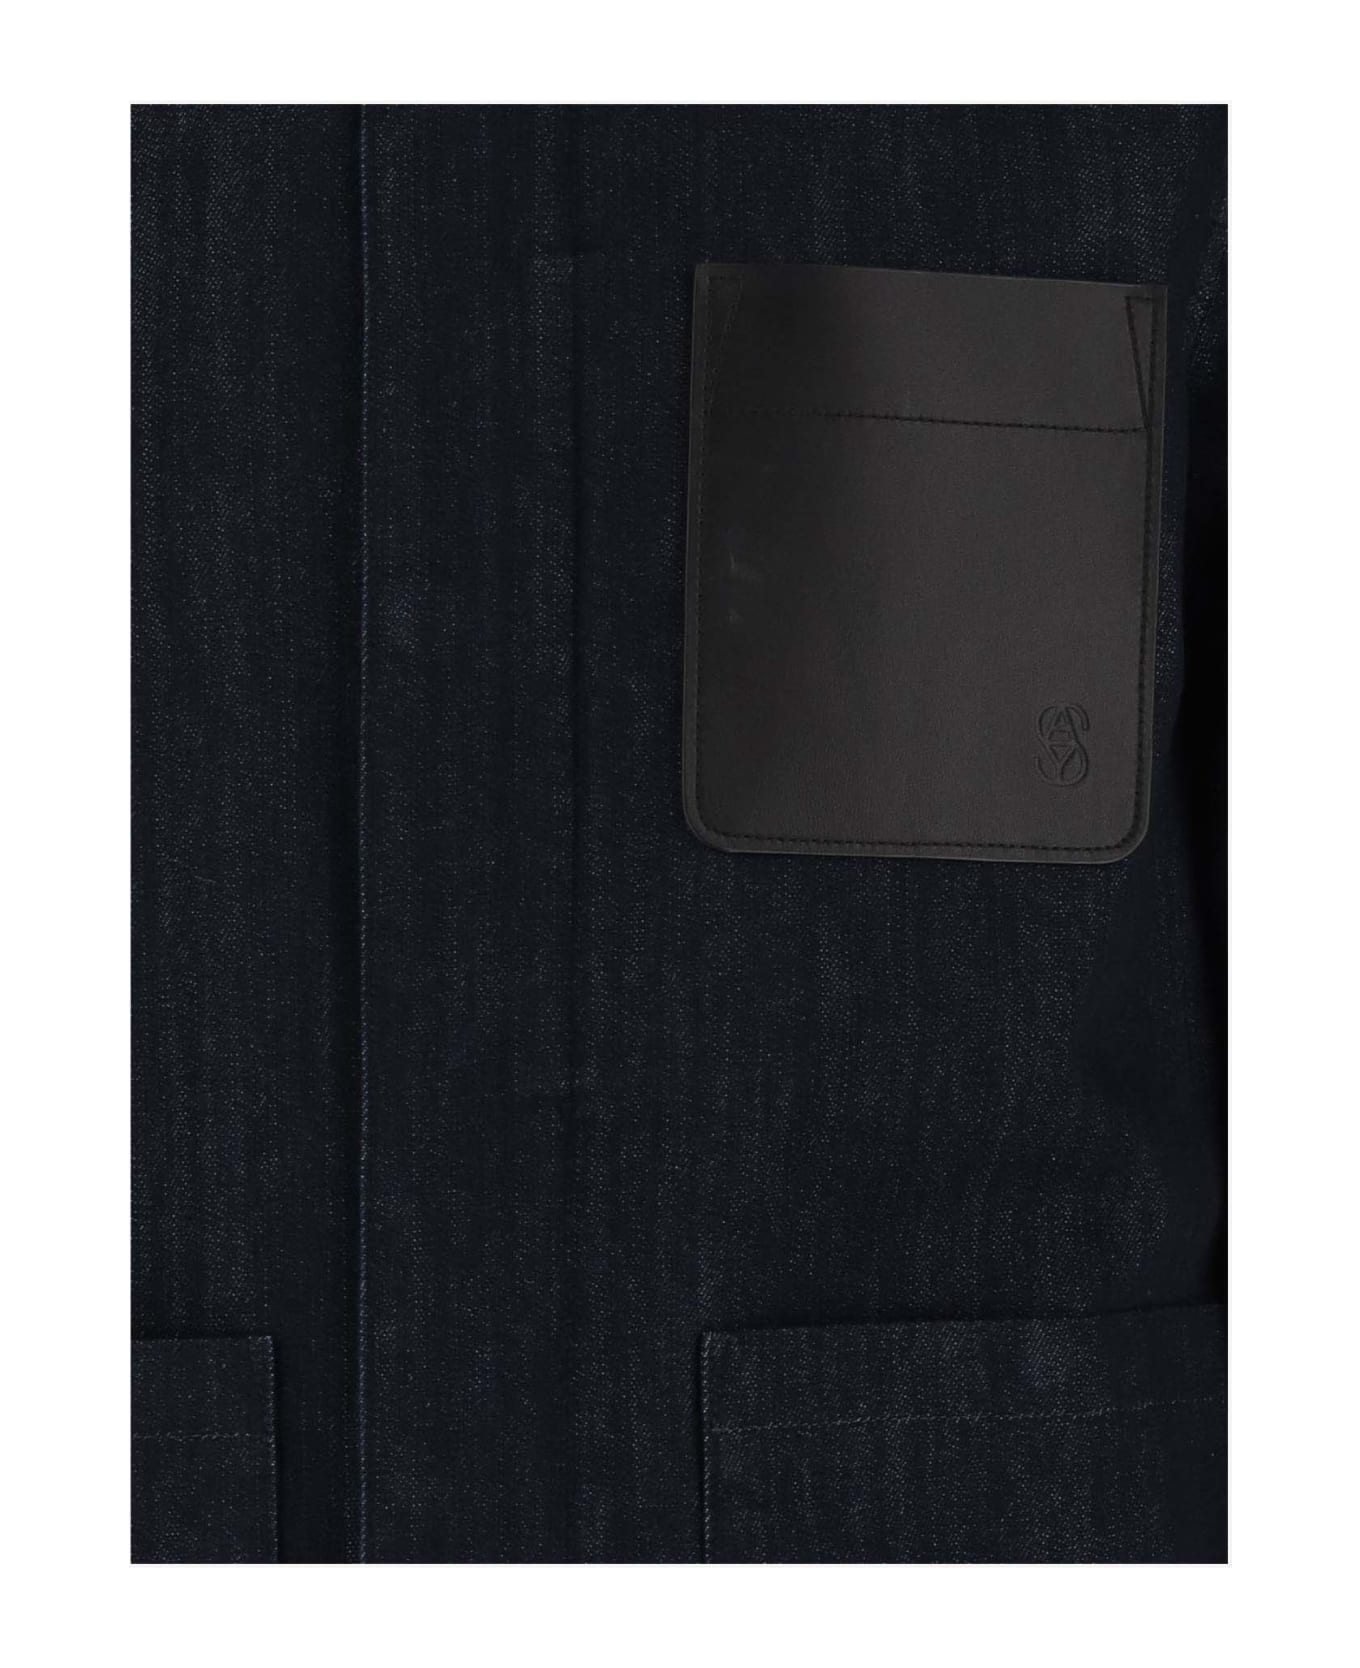 Yves Salomon Denim Jacket With Leather Application - Denim